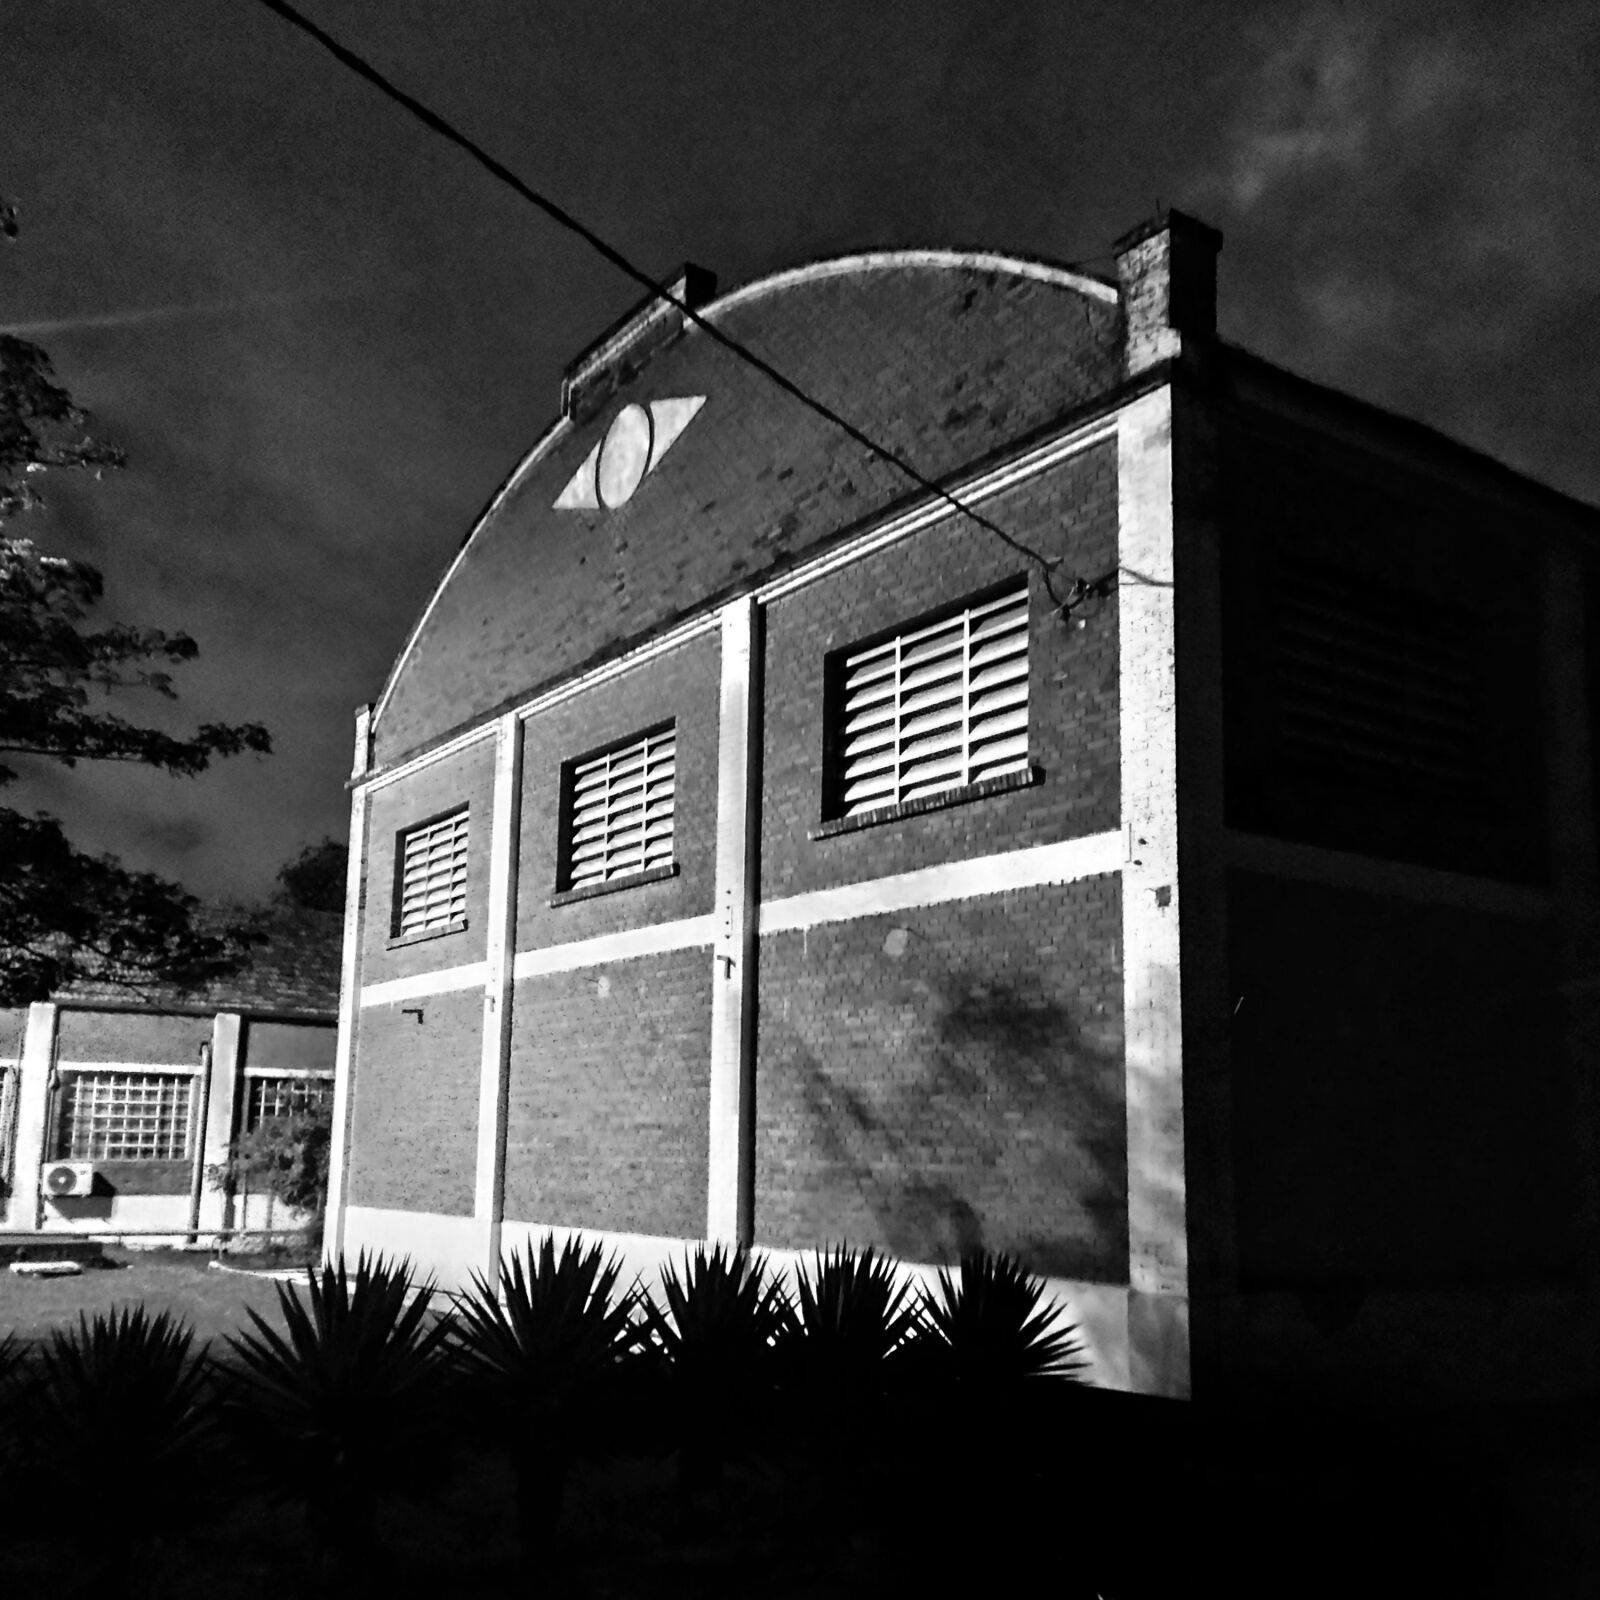 Motorola moto g(8) plus sample photo. The shed, architecture, night photography